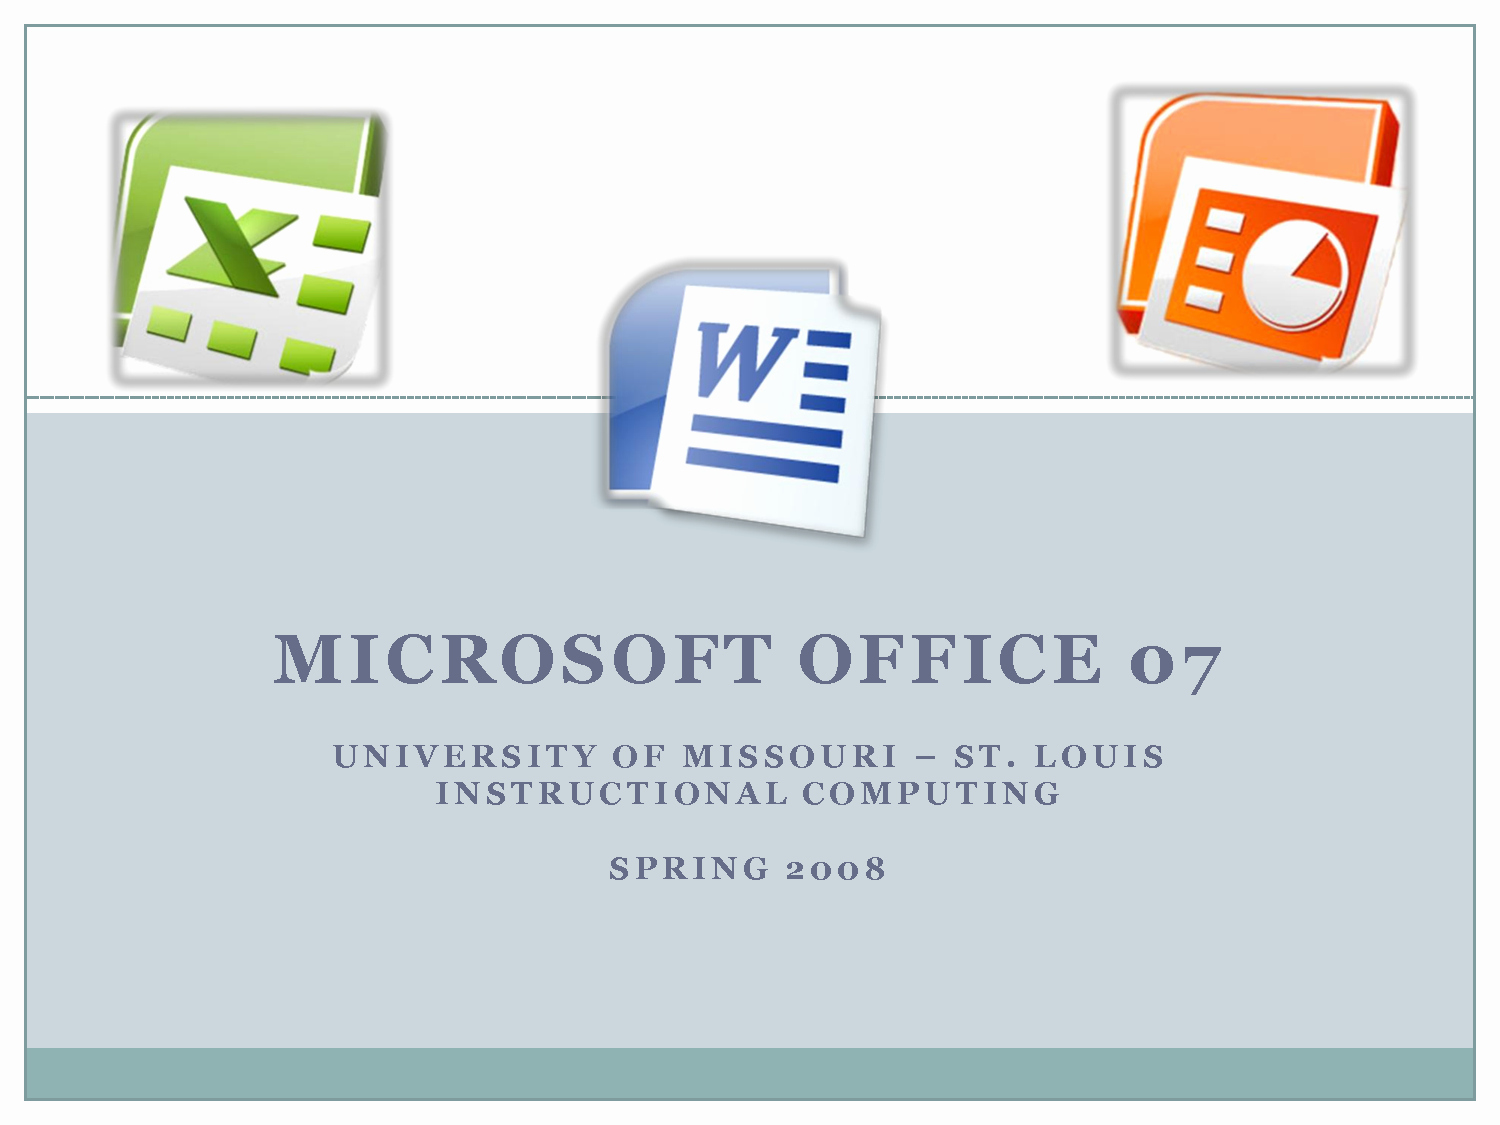 Microsoft Office Free Ppt Templates Luxury Powerpoint Templates for Ms Office 2017 Free